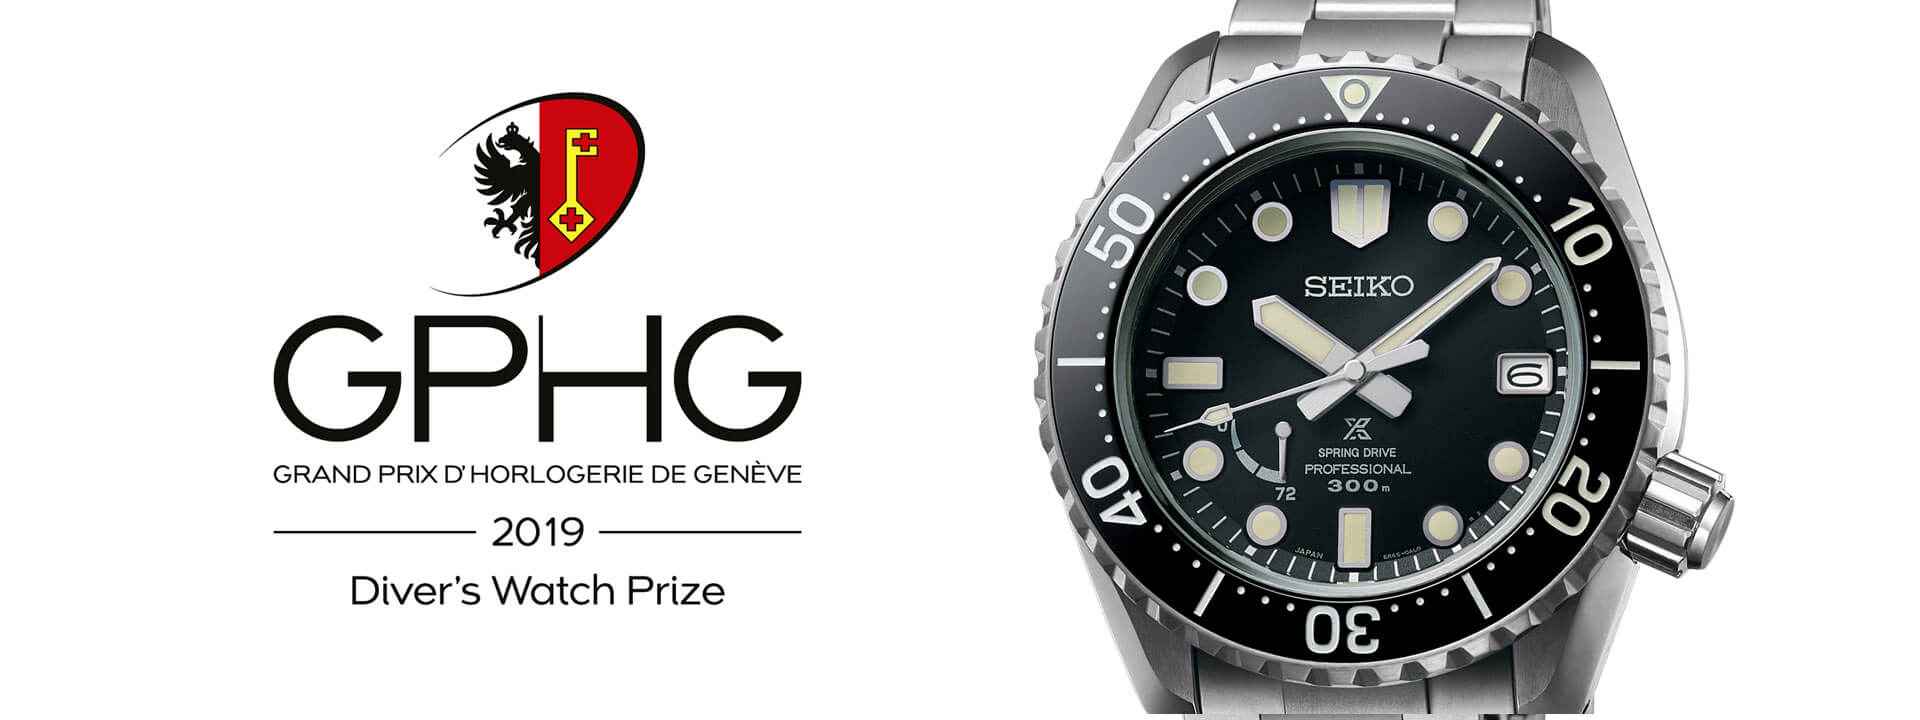 GPHG 2019 - Seiko Prospex LX Line Diver's wins Diver's Watch Prize -  Revista Pulso